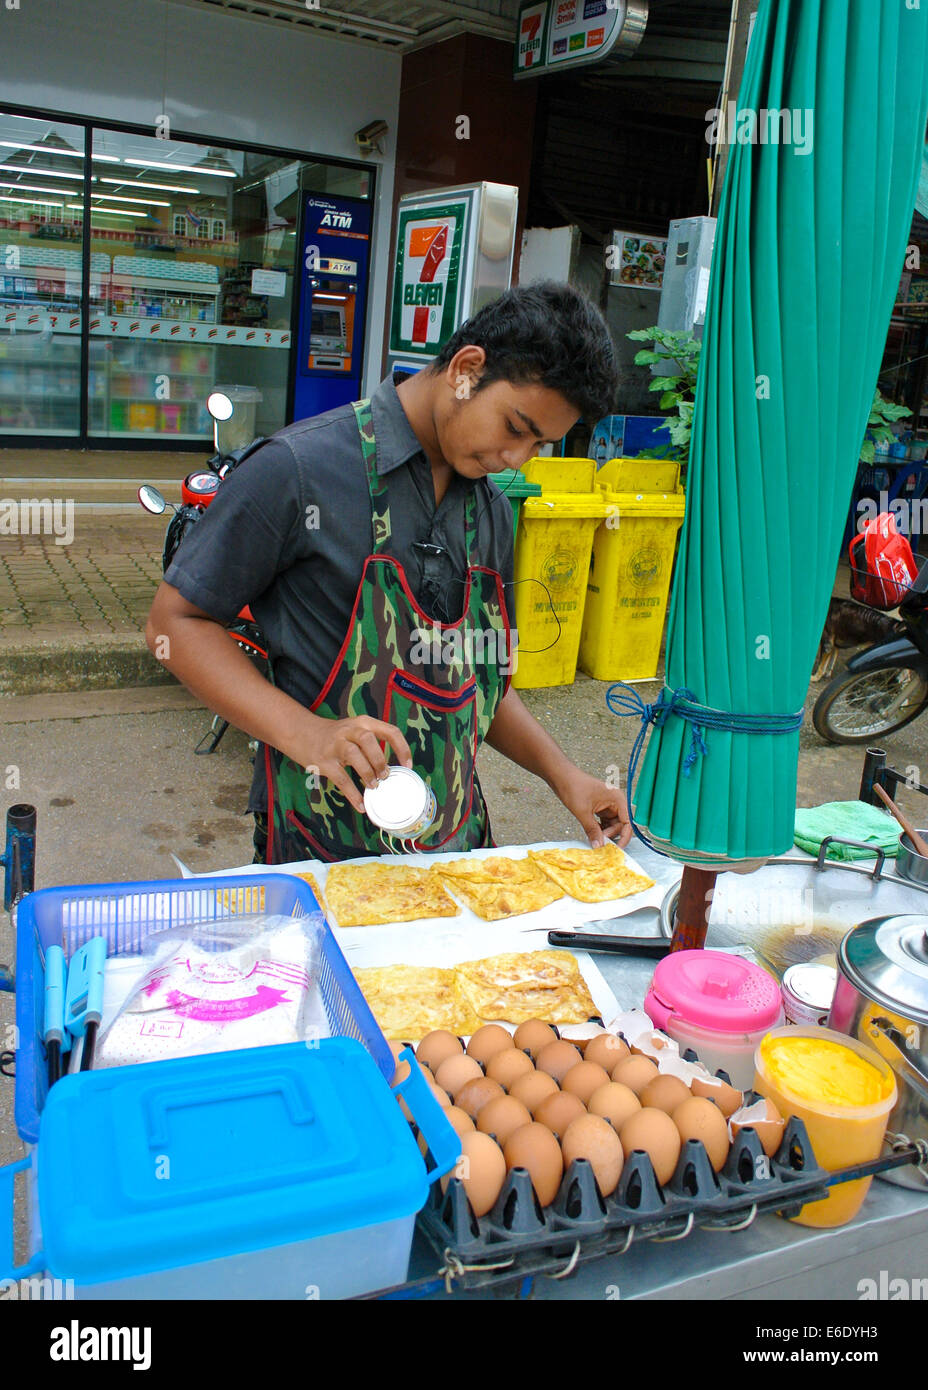 https://c8.alamy.com/comp/E6DYH3/street-food-seller-thai-pancake-maker-thailand-E6DYH3.jpg